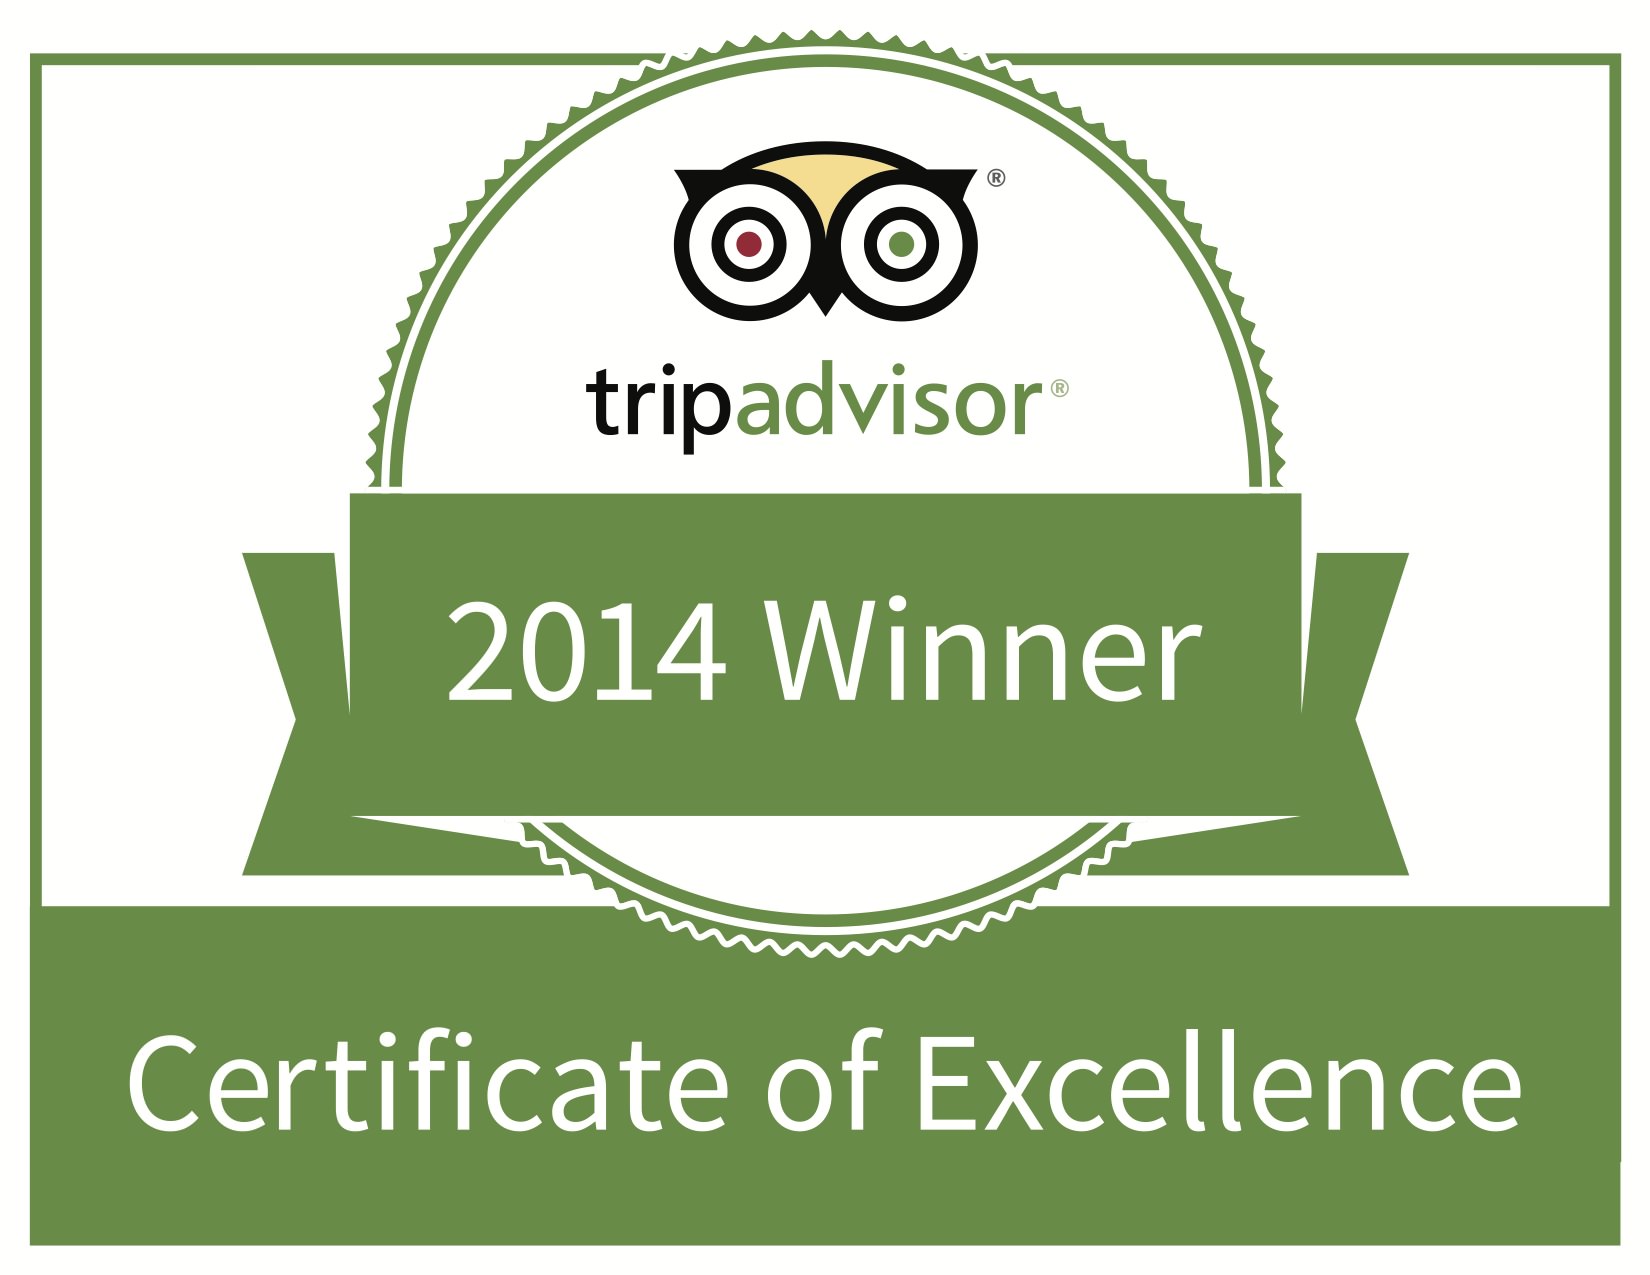 Jordan Winery Trip Advisor Certificate of Excellence, 2014 winner